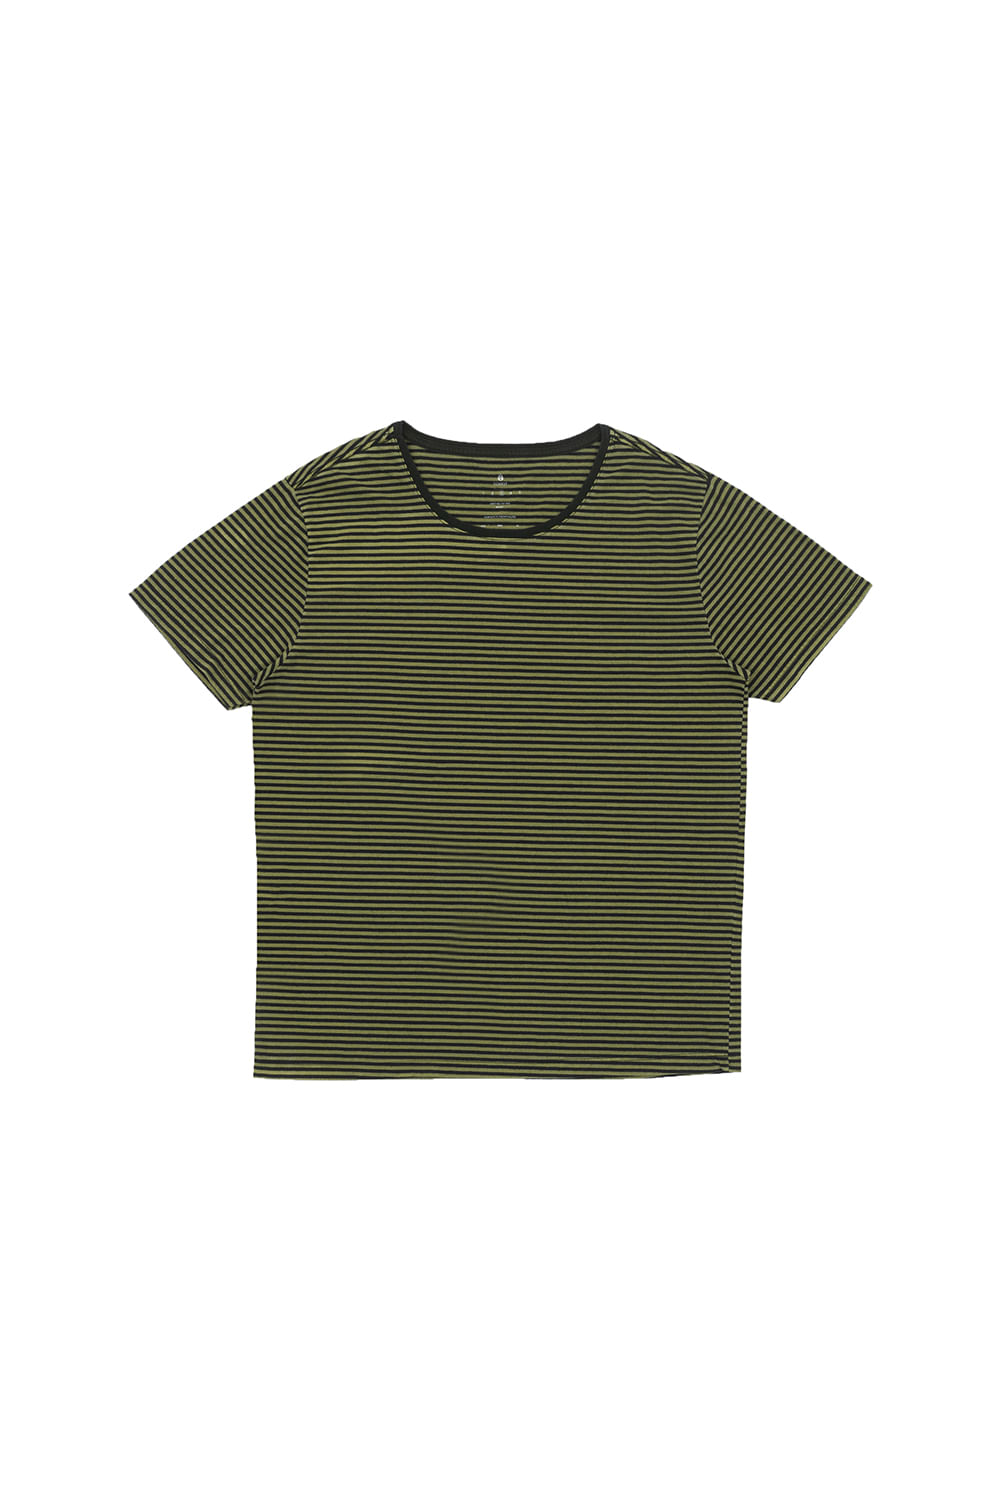 Camiseta-Pasco-Listrada-Verde